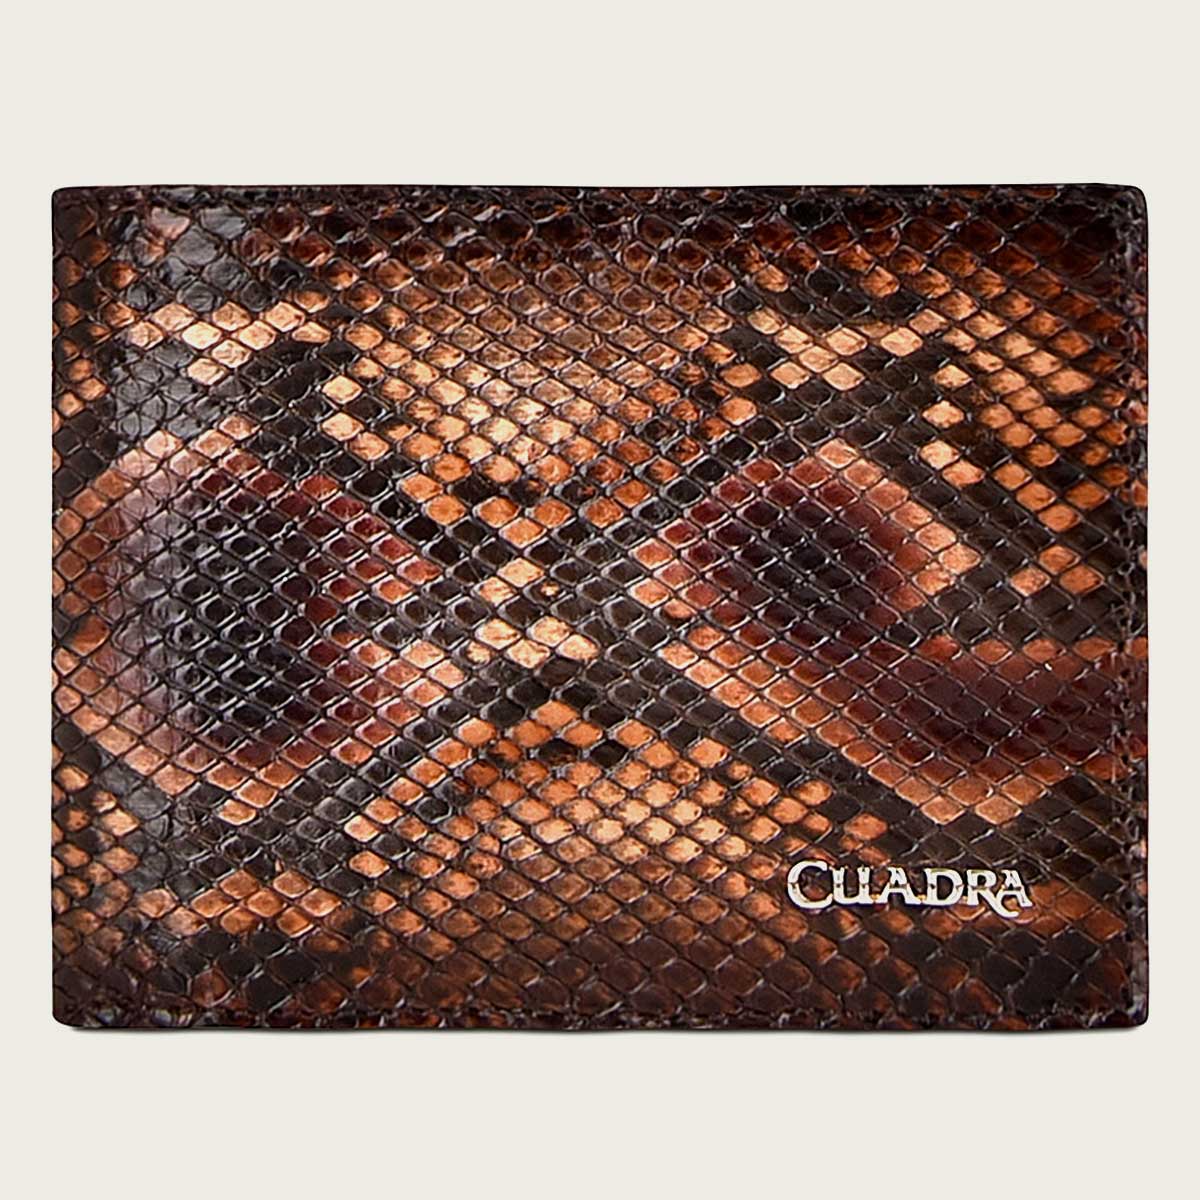 Handmade Black leather wallet with Cuadra's monogram appliqué